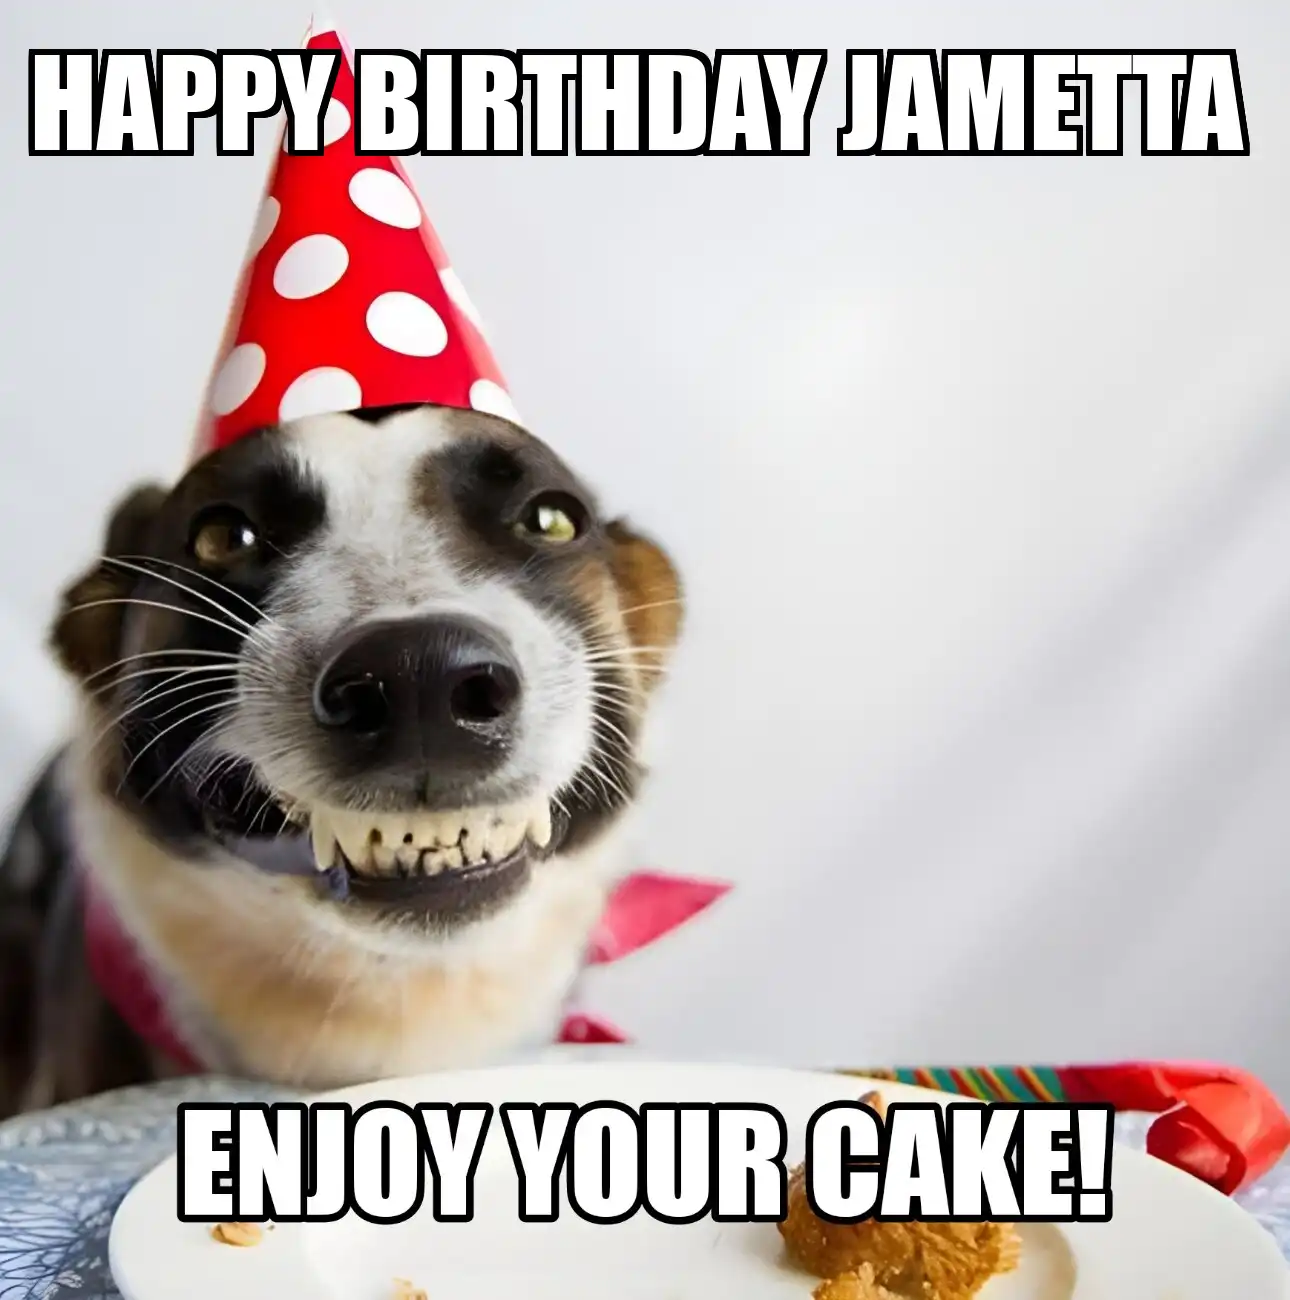 Happy Birthday Jametta Enjoy Your Cake Dog Meme